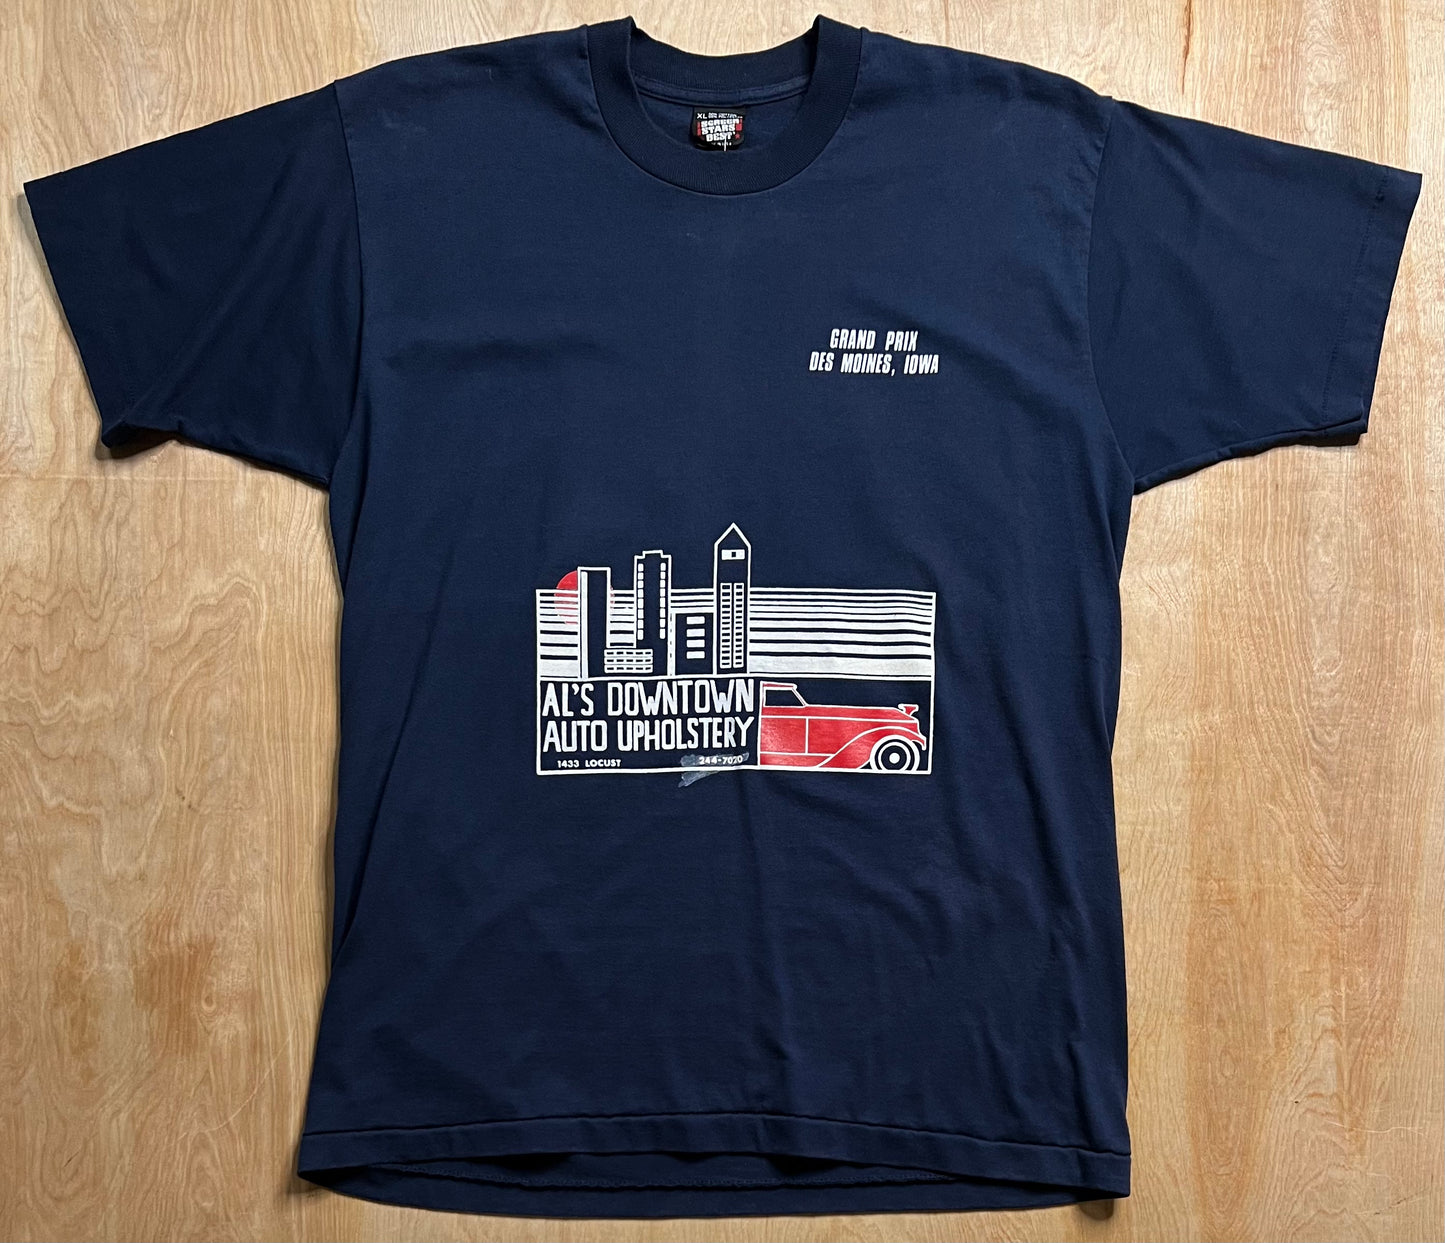 Early 1990's Grand Prix Des Moines, Iowa Single Stitch T-Shirt